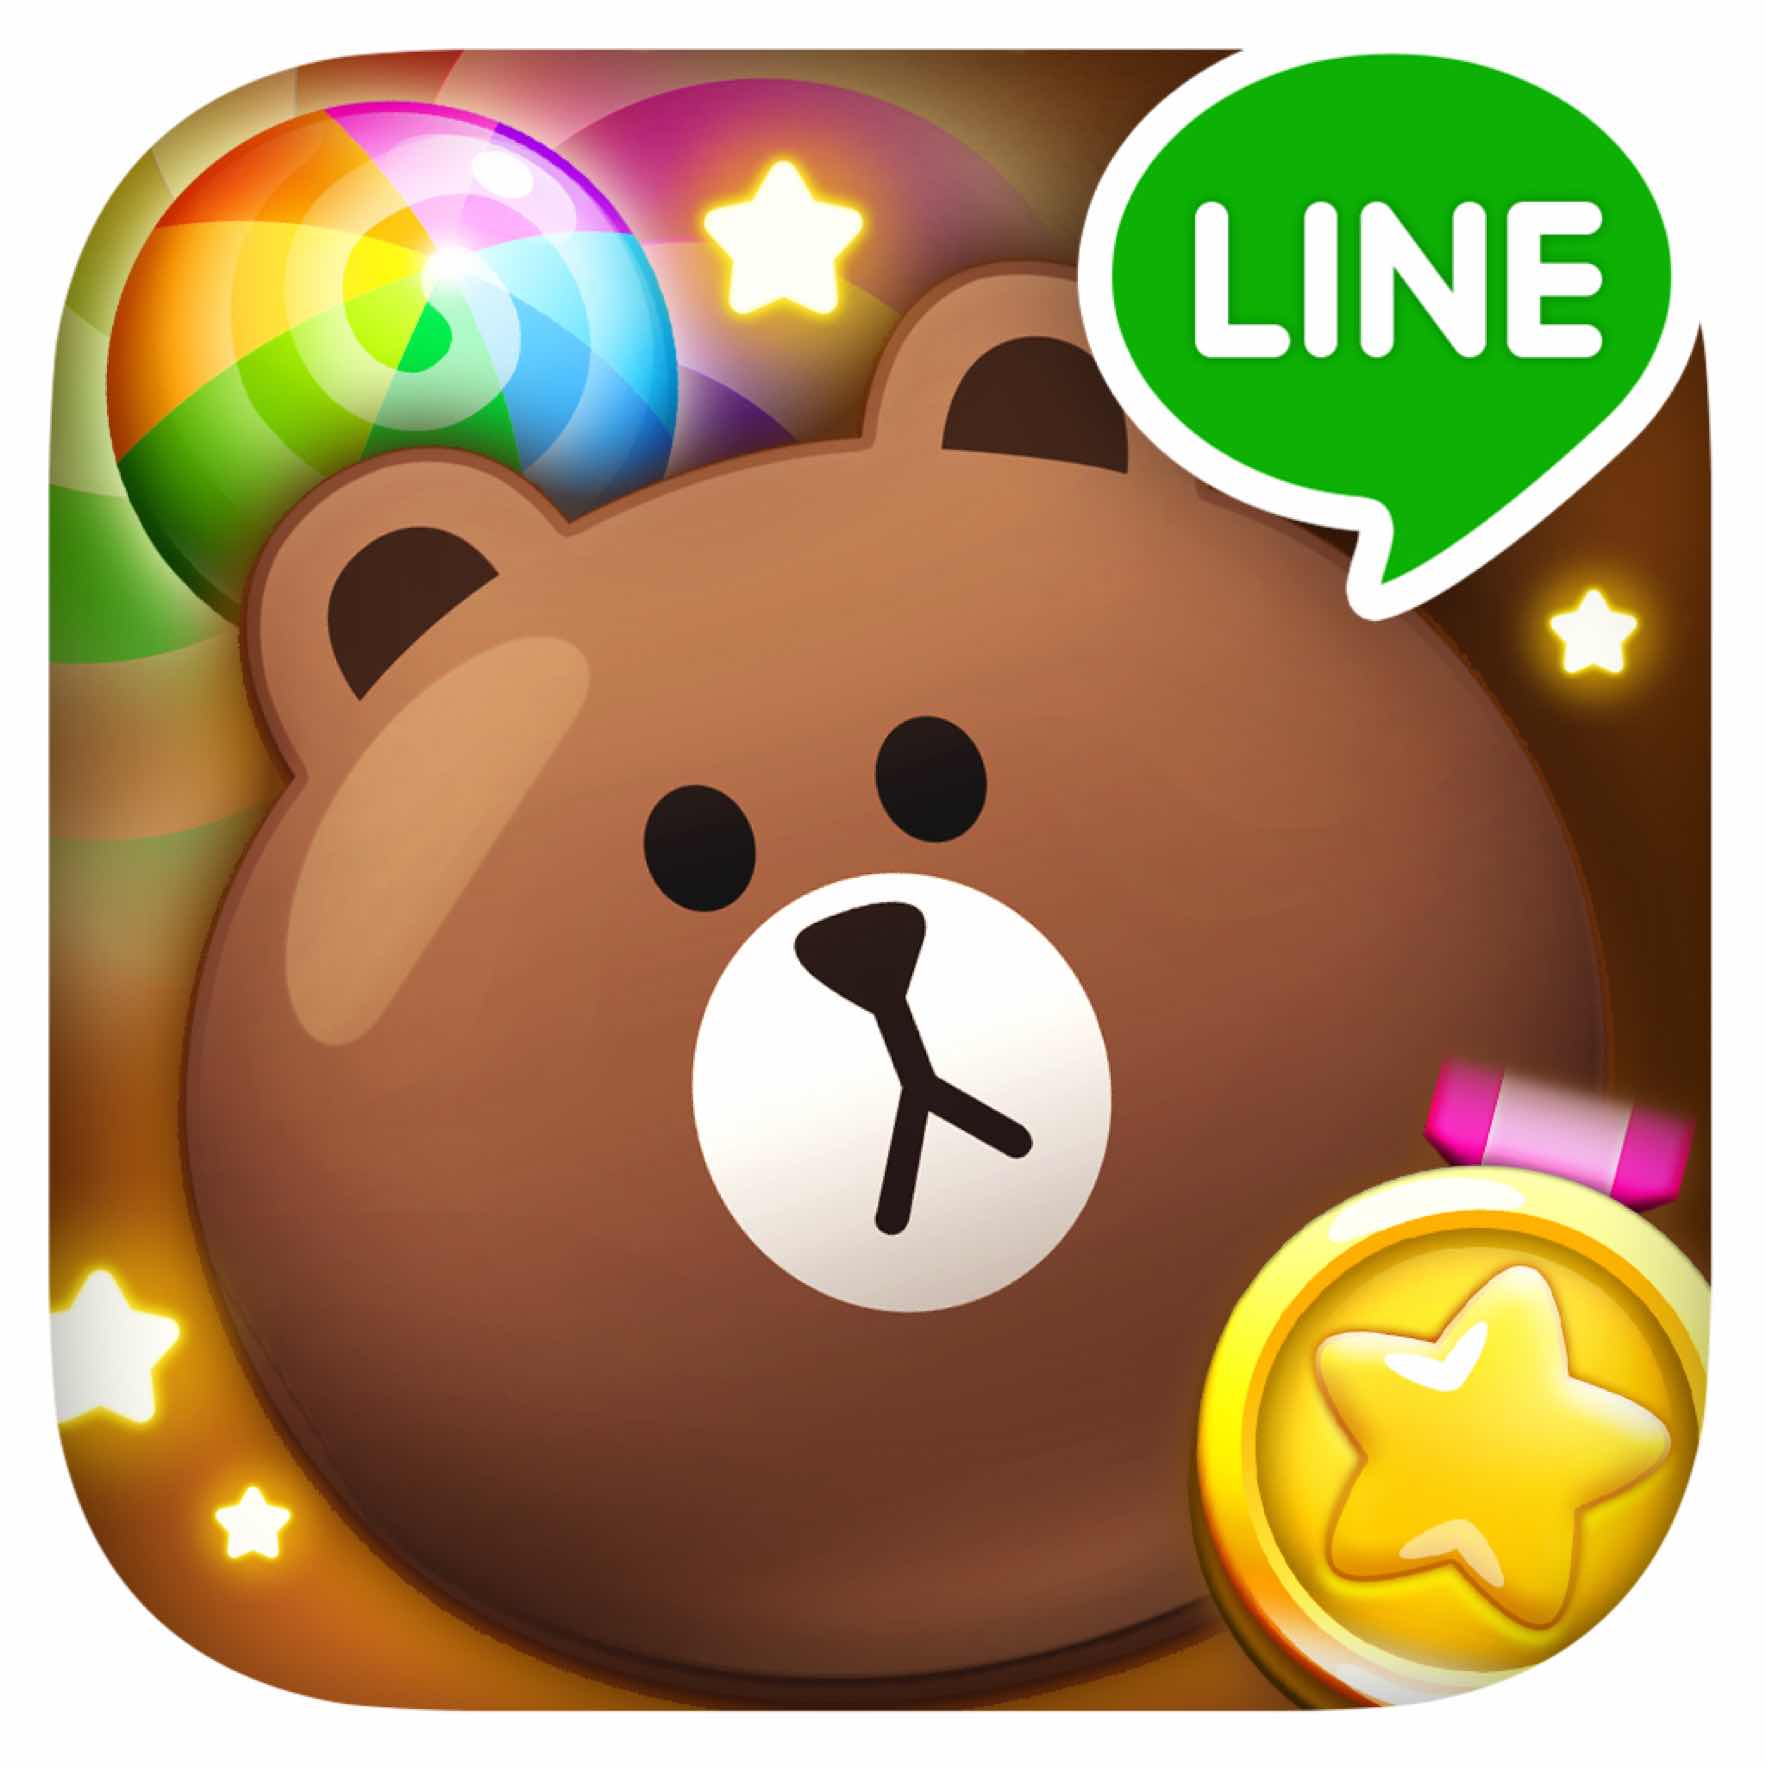 LINE POP2: LINE POPの続編が出たぞー! ブロックを6方向に動かして爽快パズルだ!